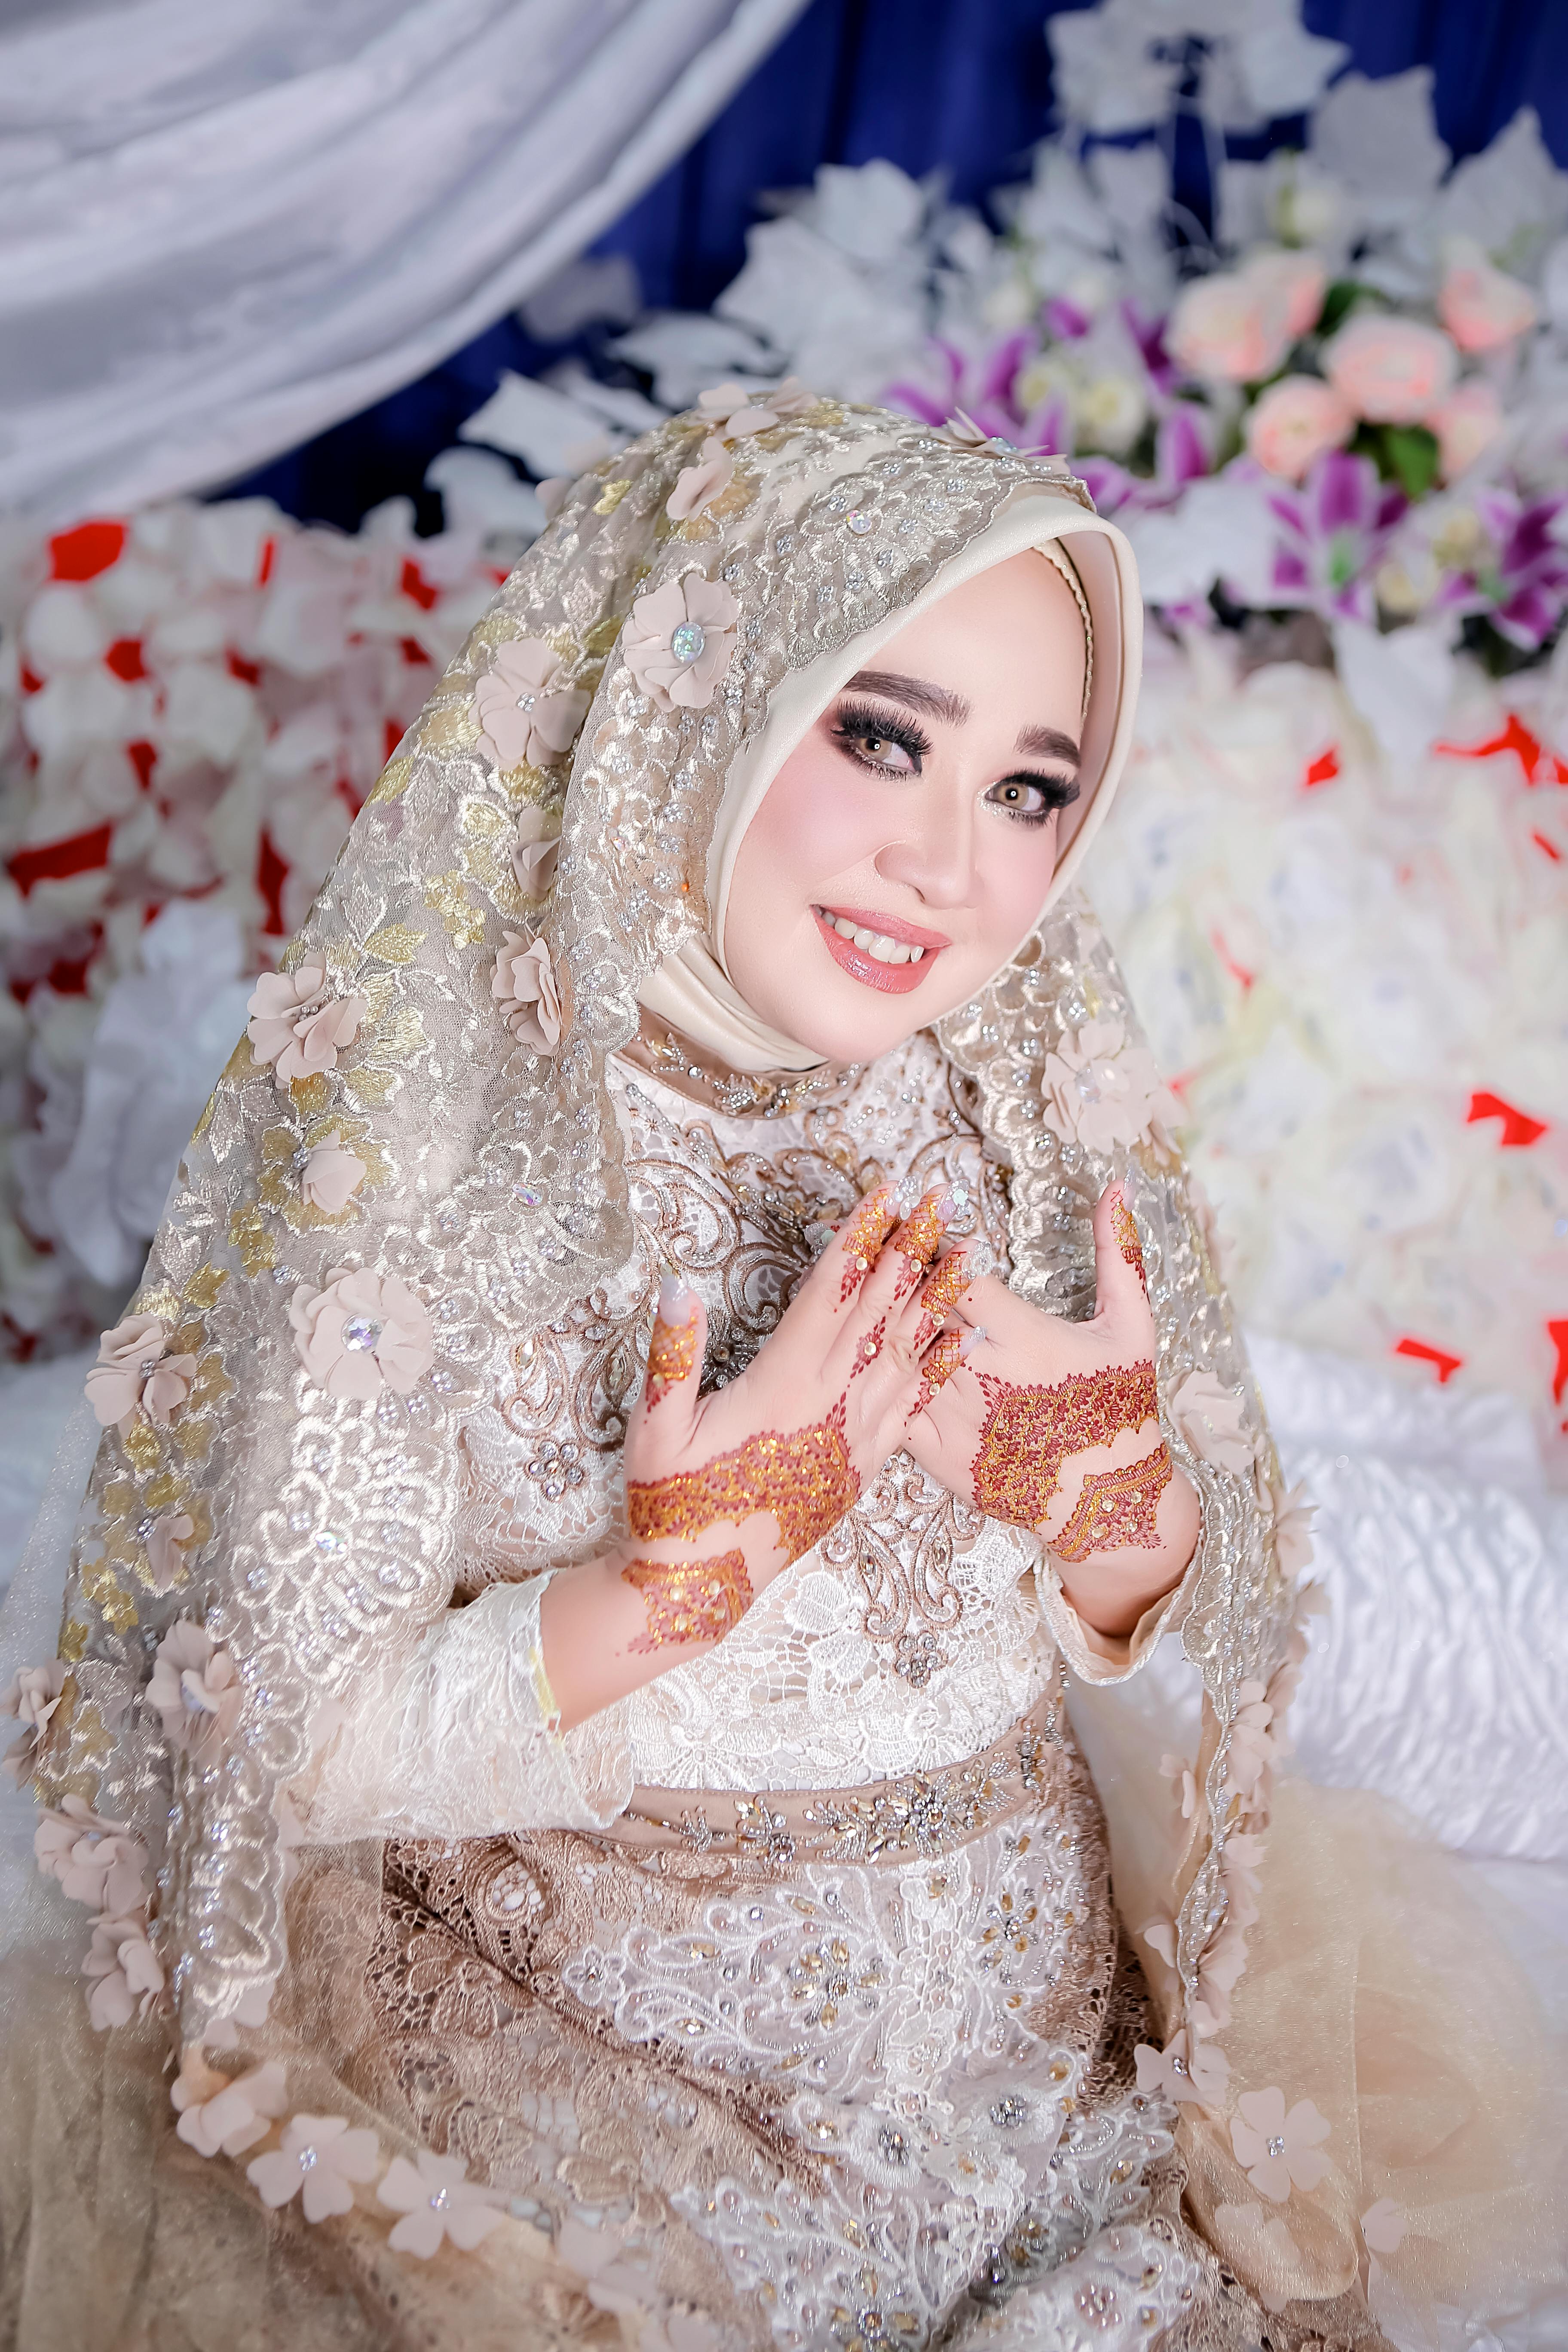 Positive Muslim woman in wedding dress · Free Stock Photo